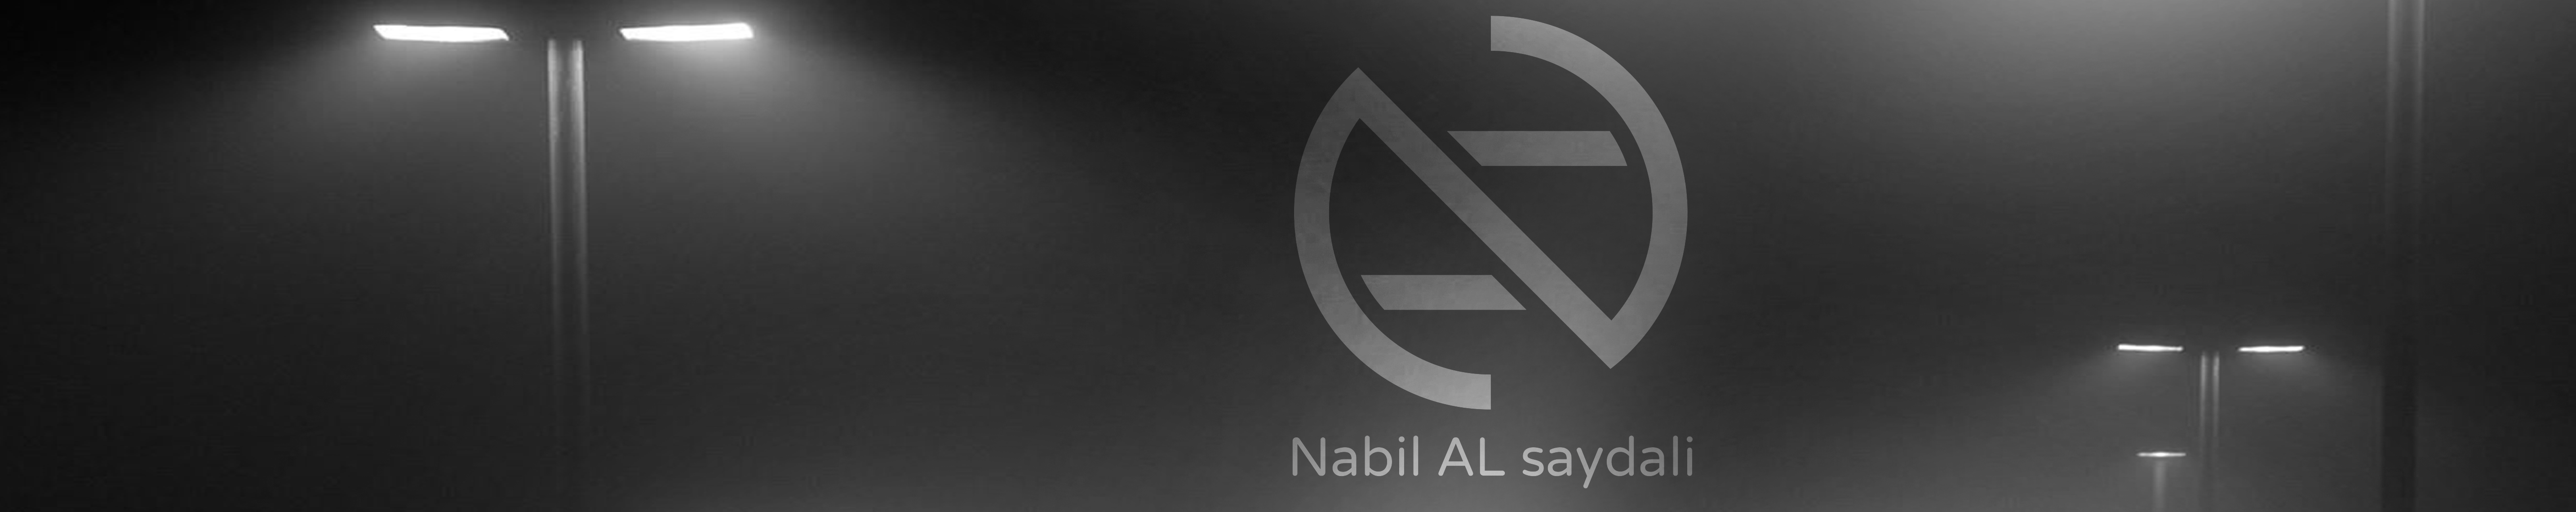 Nabil Al Saydalis profilbanner